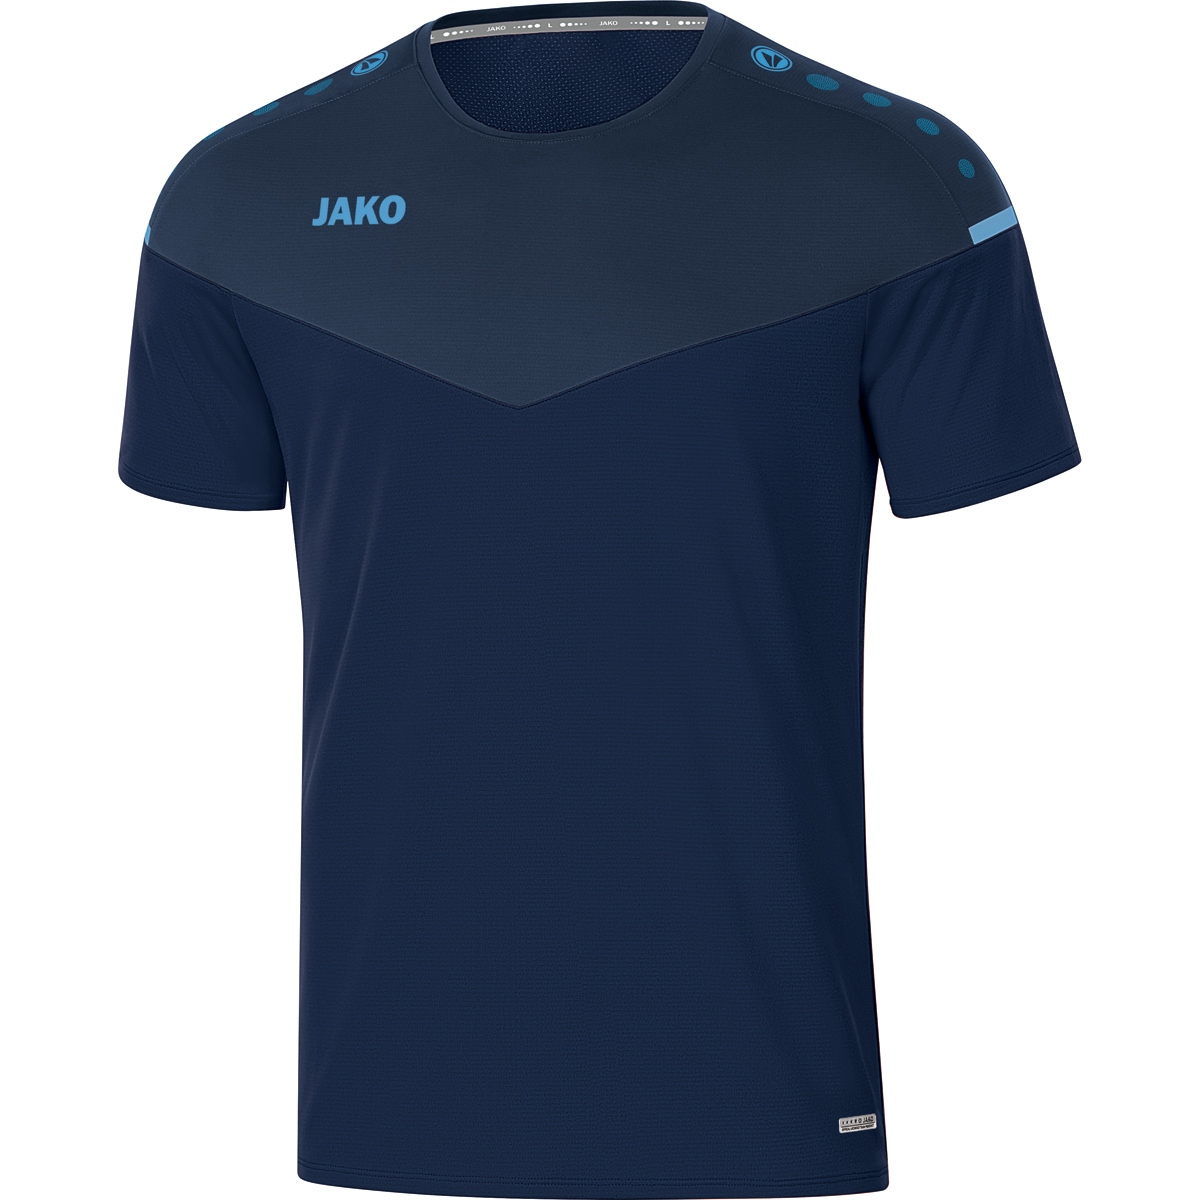 JAKO Champ Herren, 6120 Gr. 3XL, 2.0 marine/darkblue/skyblue, T-Shirt